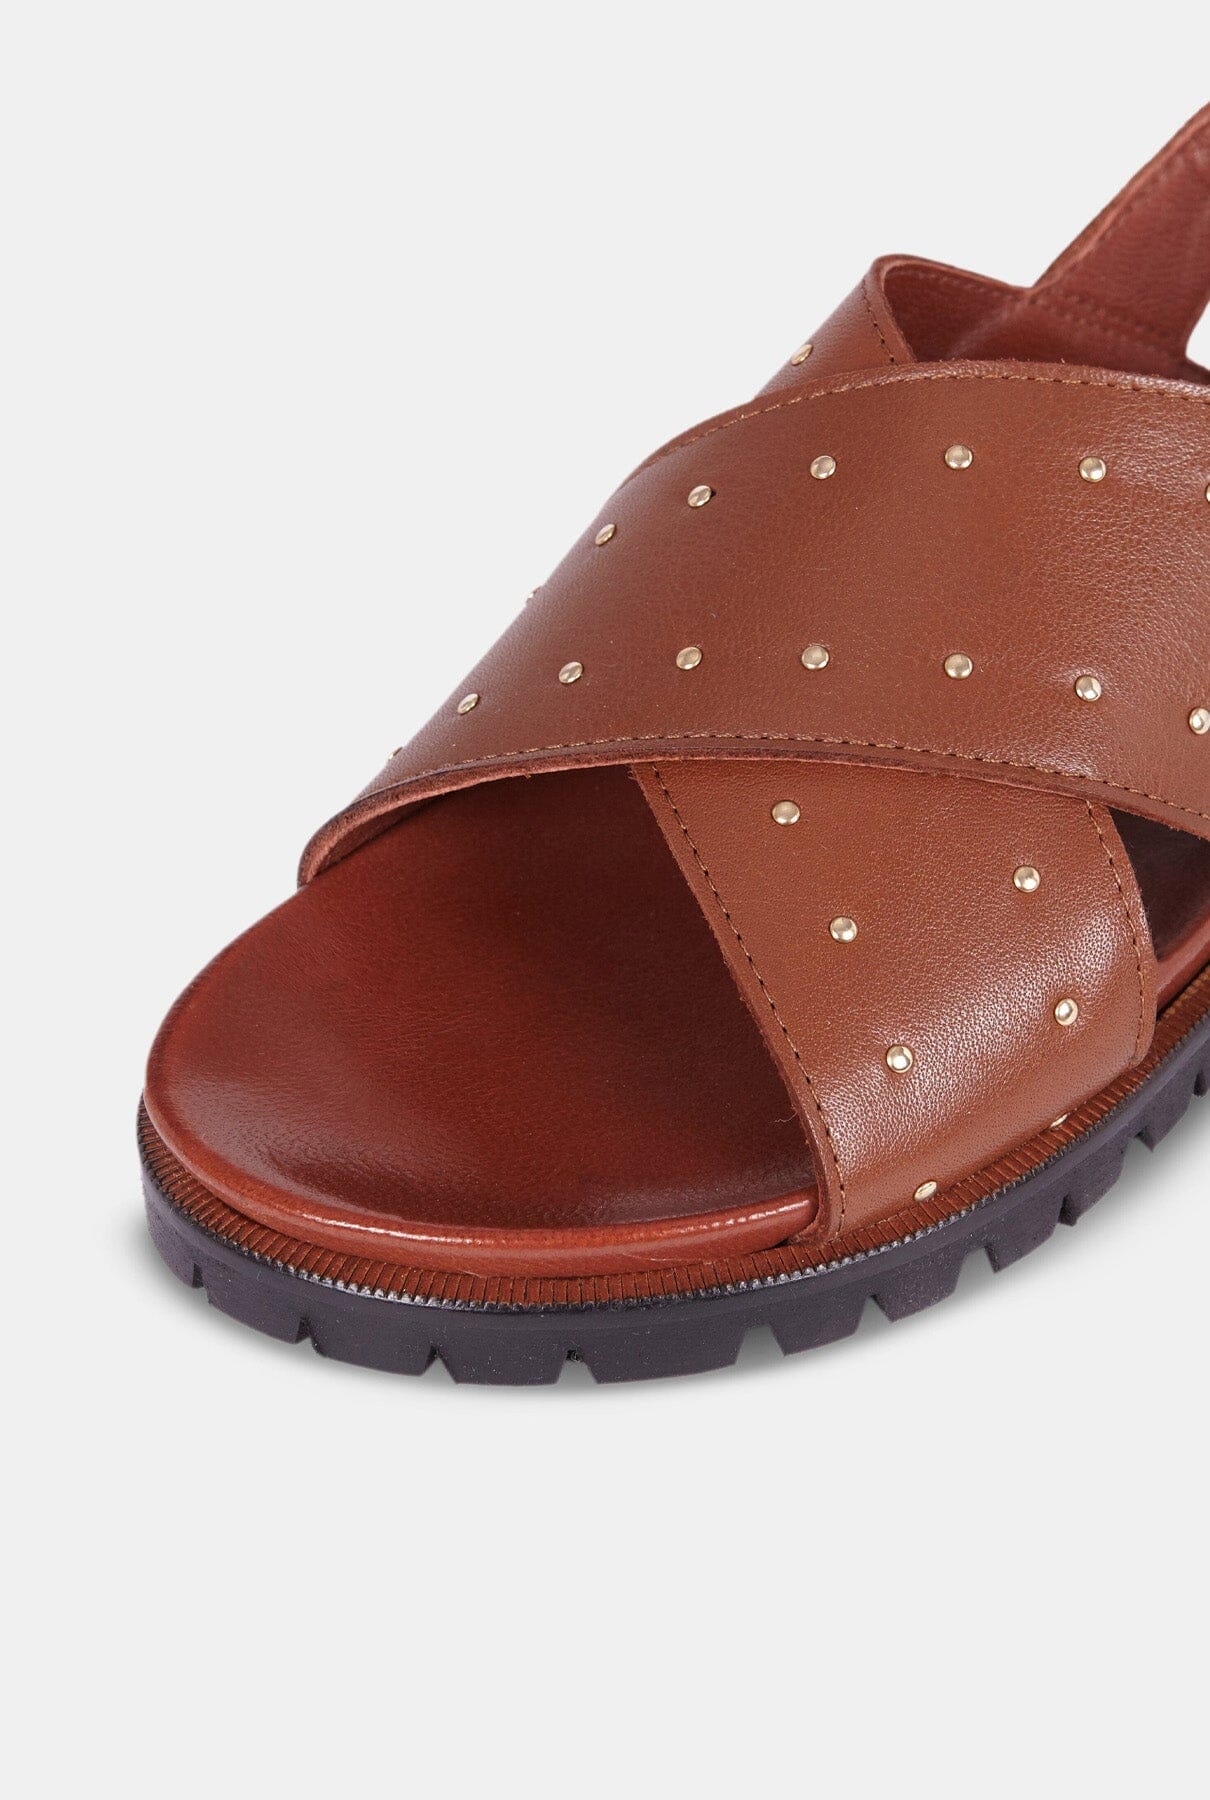 ANGIE CUERO 2CM Flat sandals Micuir 